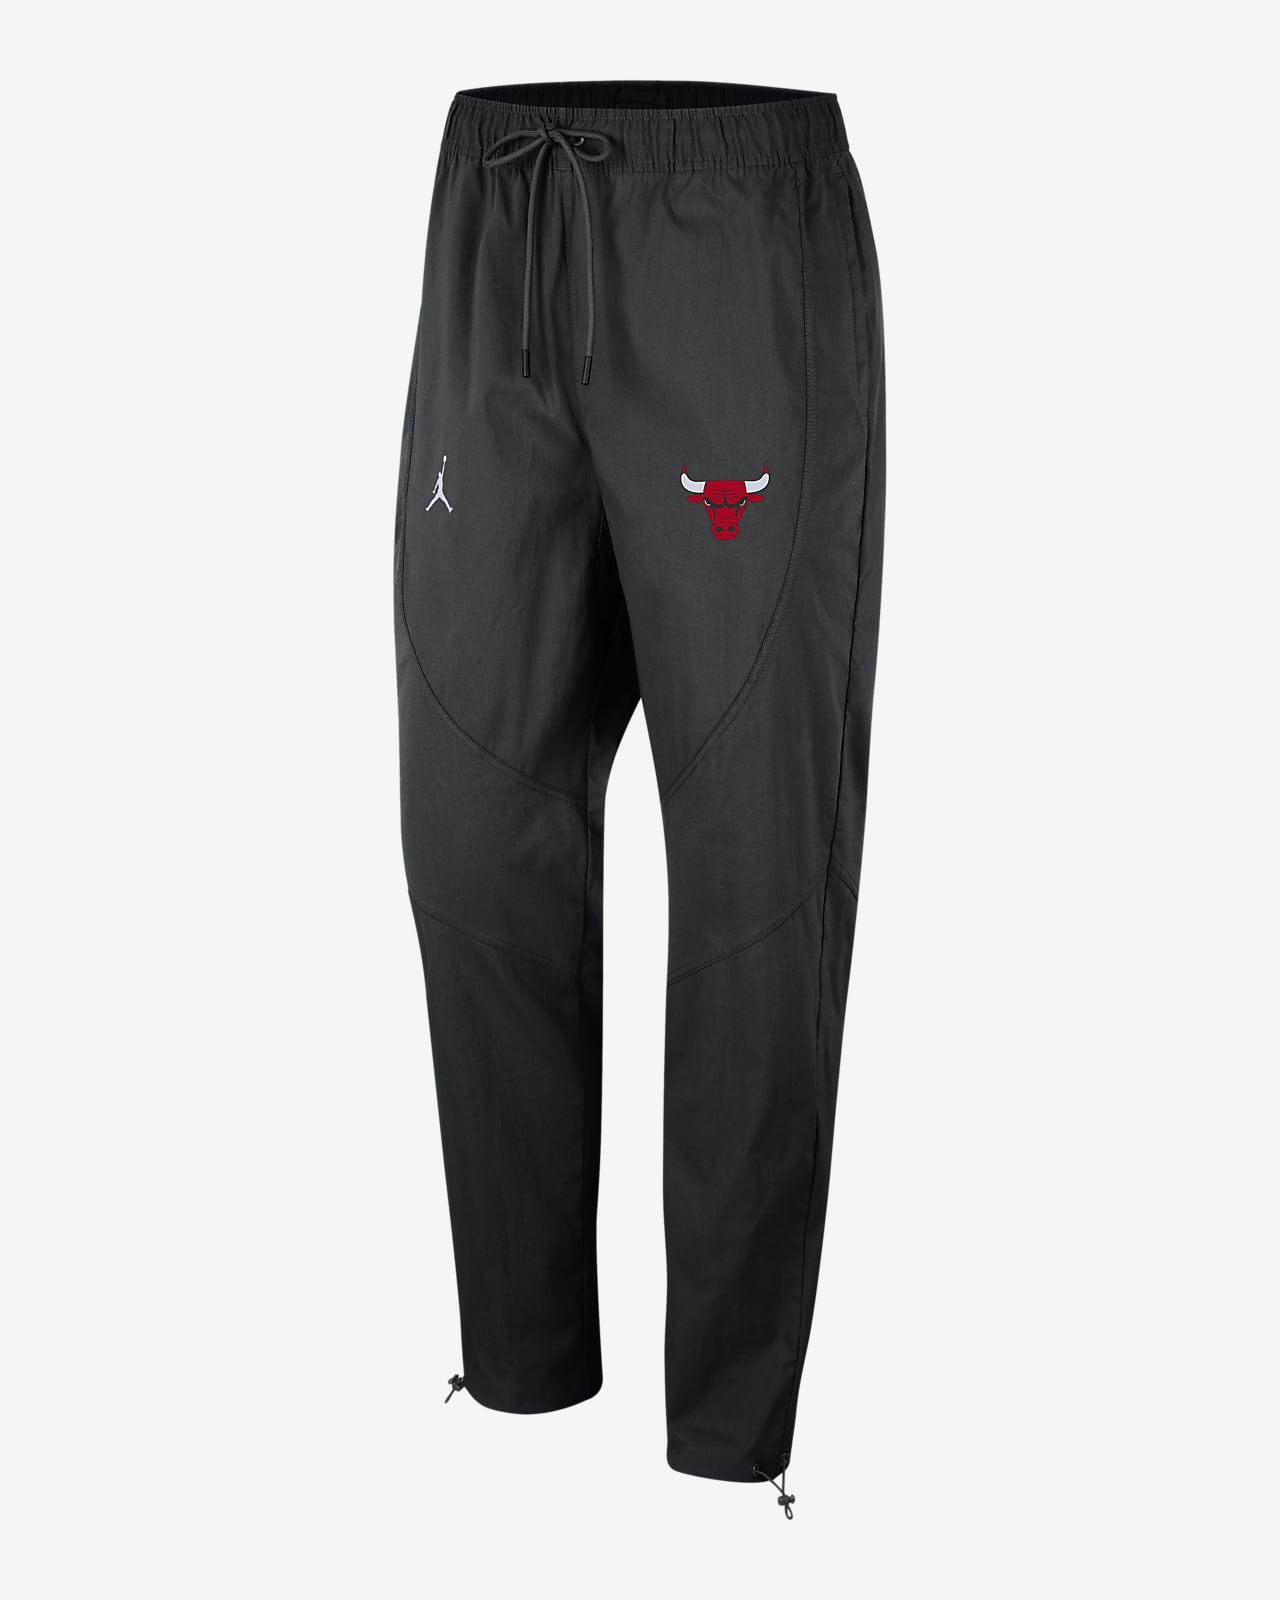 Jordan Brand Men's Chicago Bulls Courtside Statement Edition Fleece Pants - Black